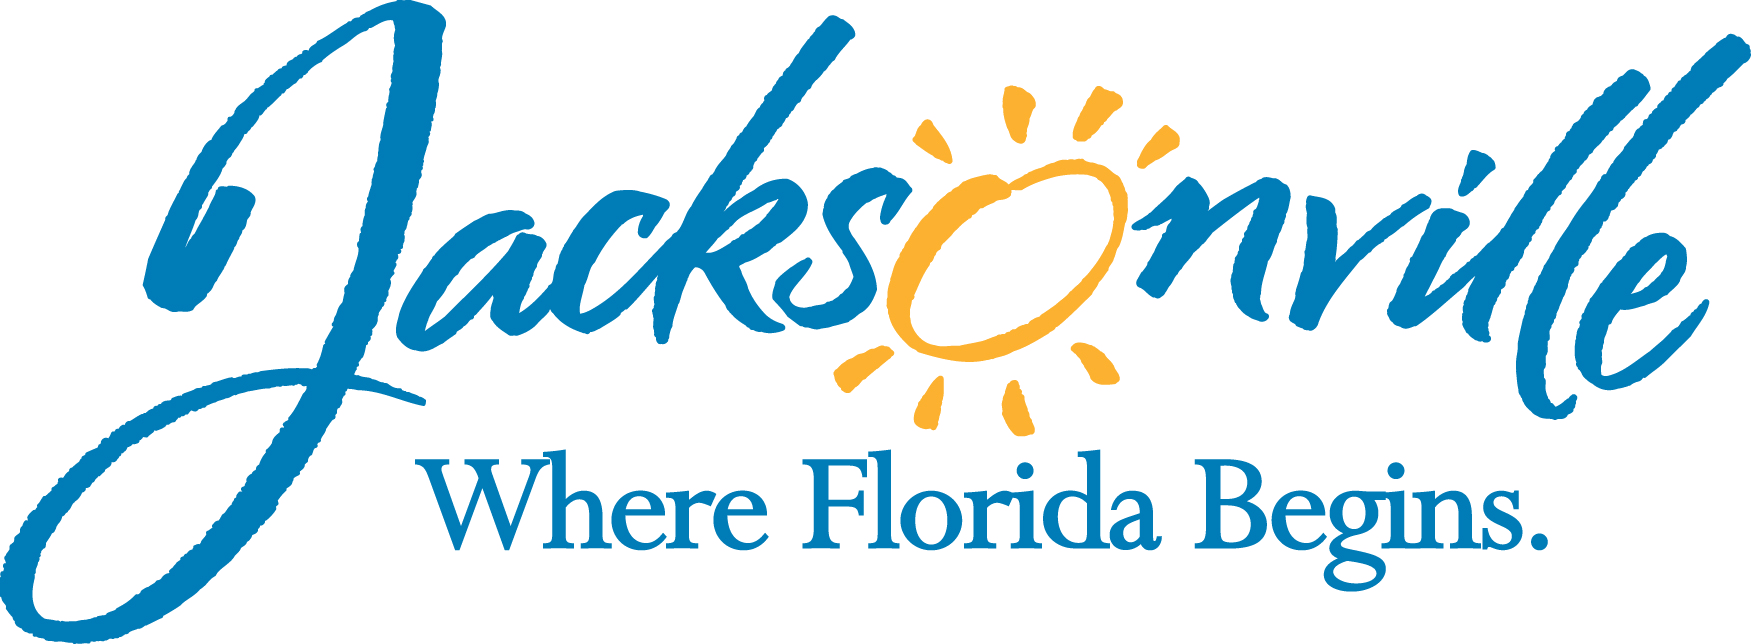 Jacksonville Logo - jacksonville-logo - ADARA